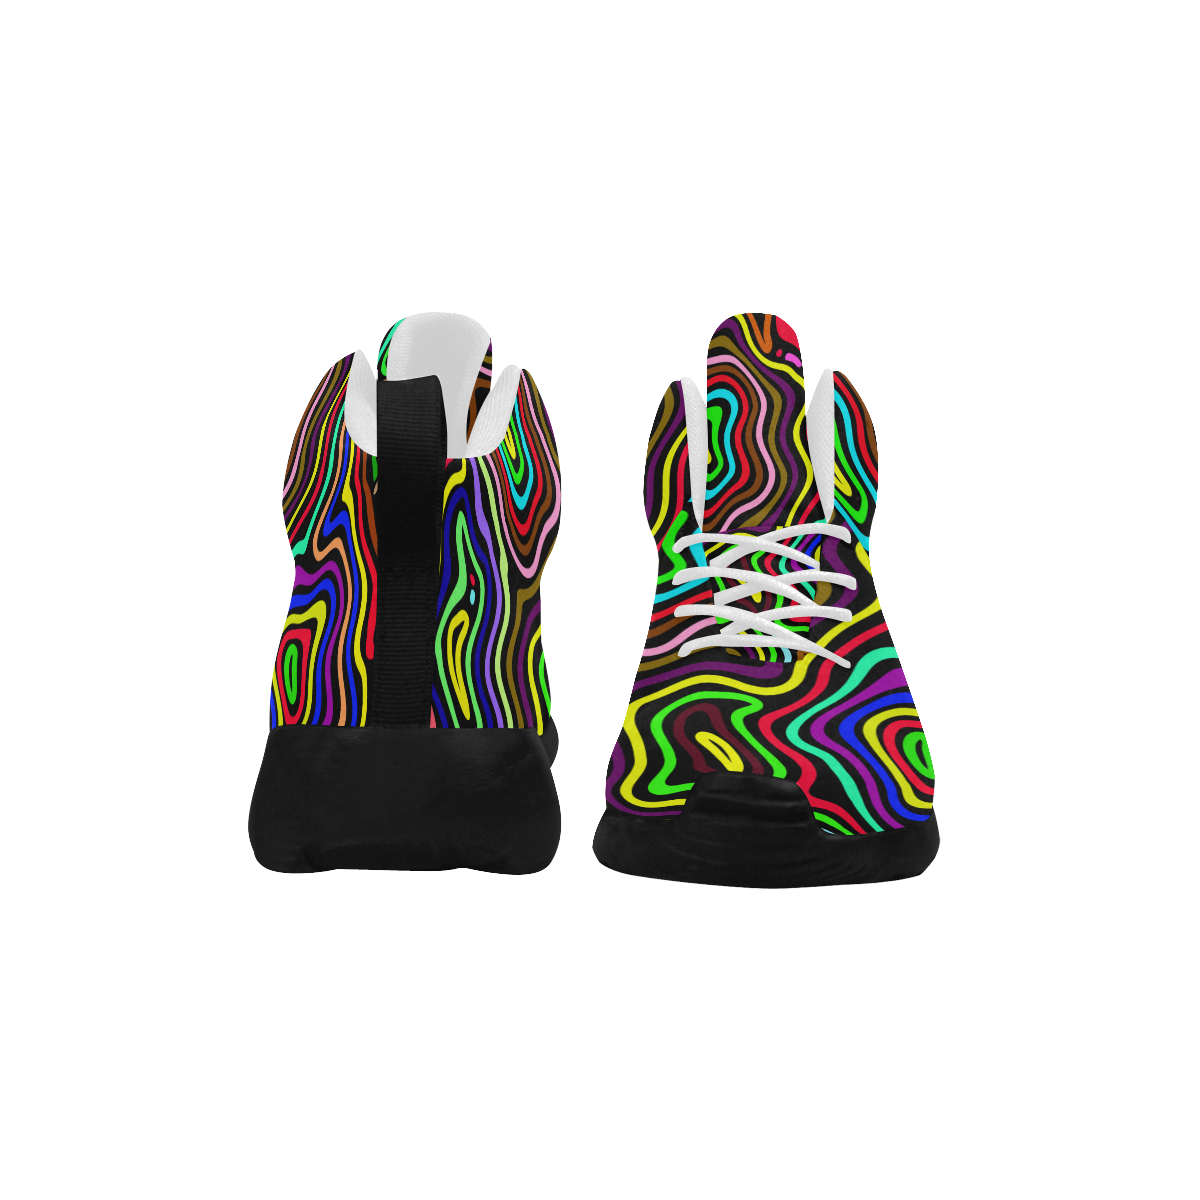 Multicolored Wavy Line Pattern Men's Chukka Training Shoes (Model 57502)